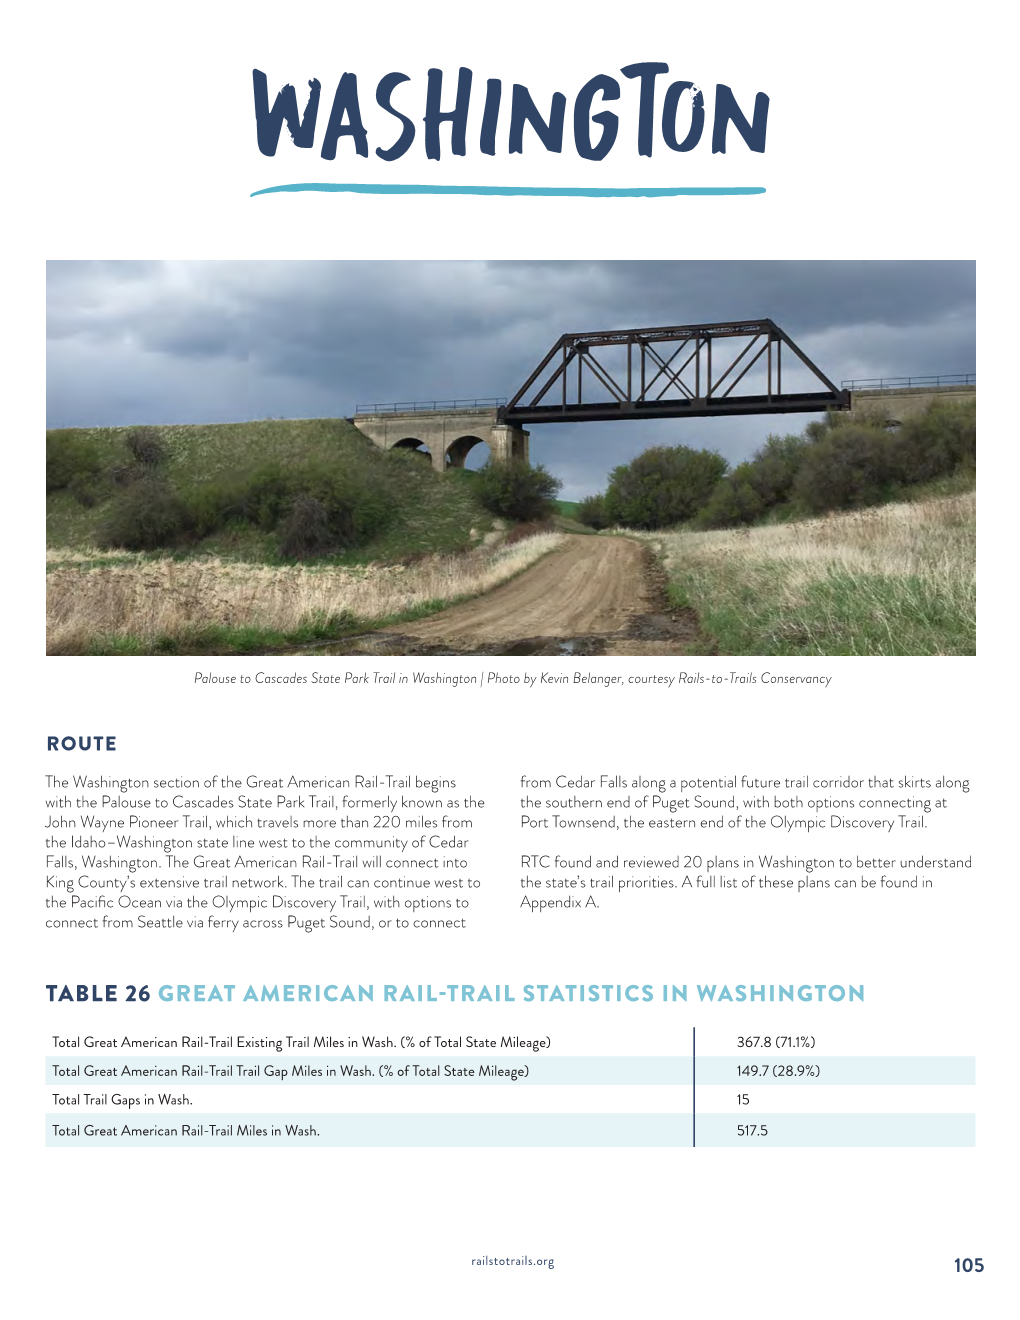 Table 26 Great American Rail-Trail Statistics in Washington